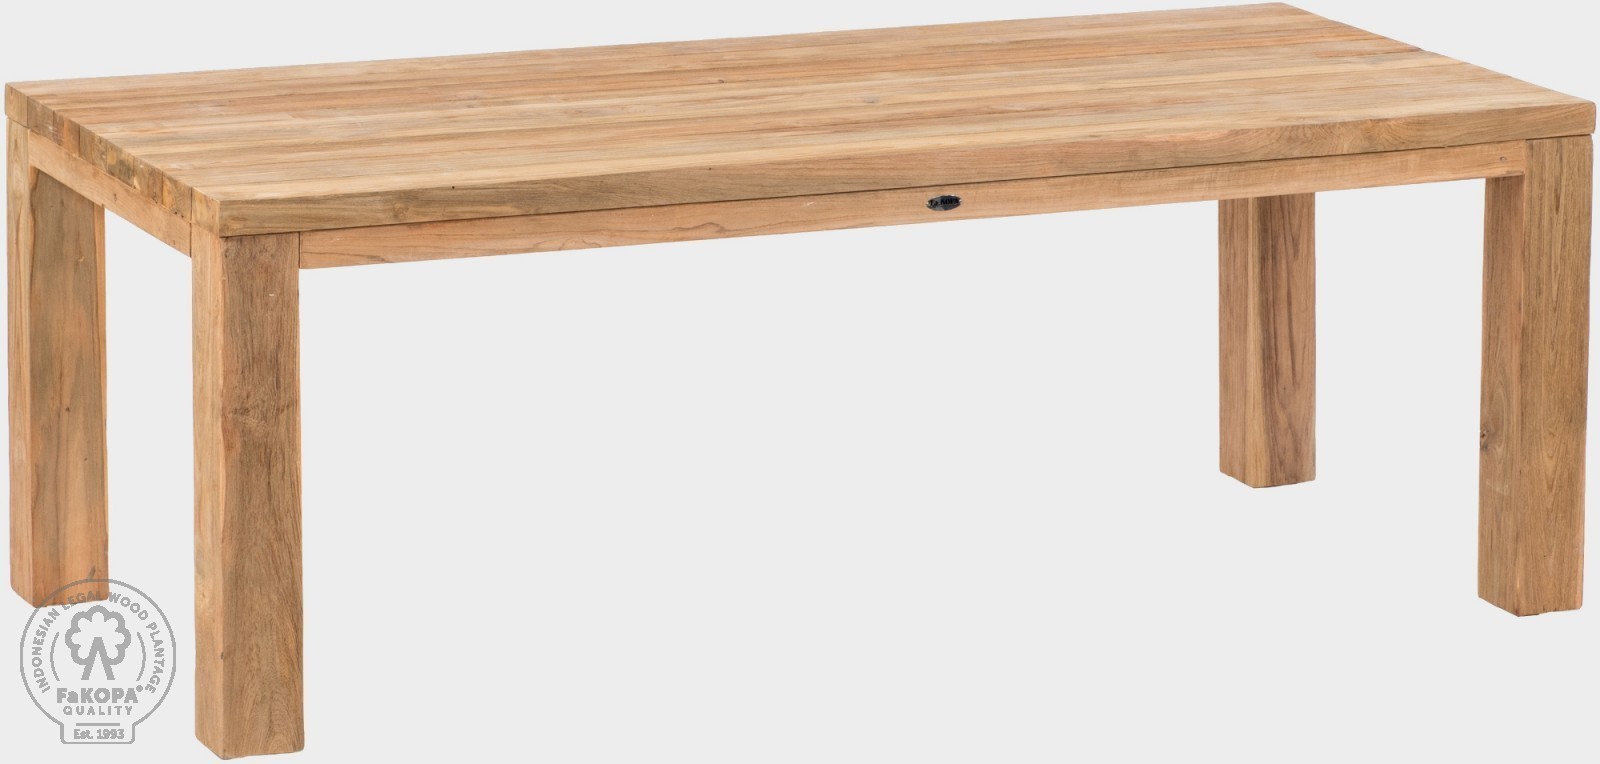 FaKOPA s. r. o. FLOSS RECYCLE - masivní stůl z recyklovaného teaku 220 x 100 cm (deska z prken), teak